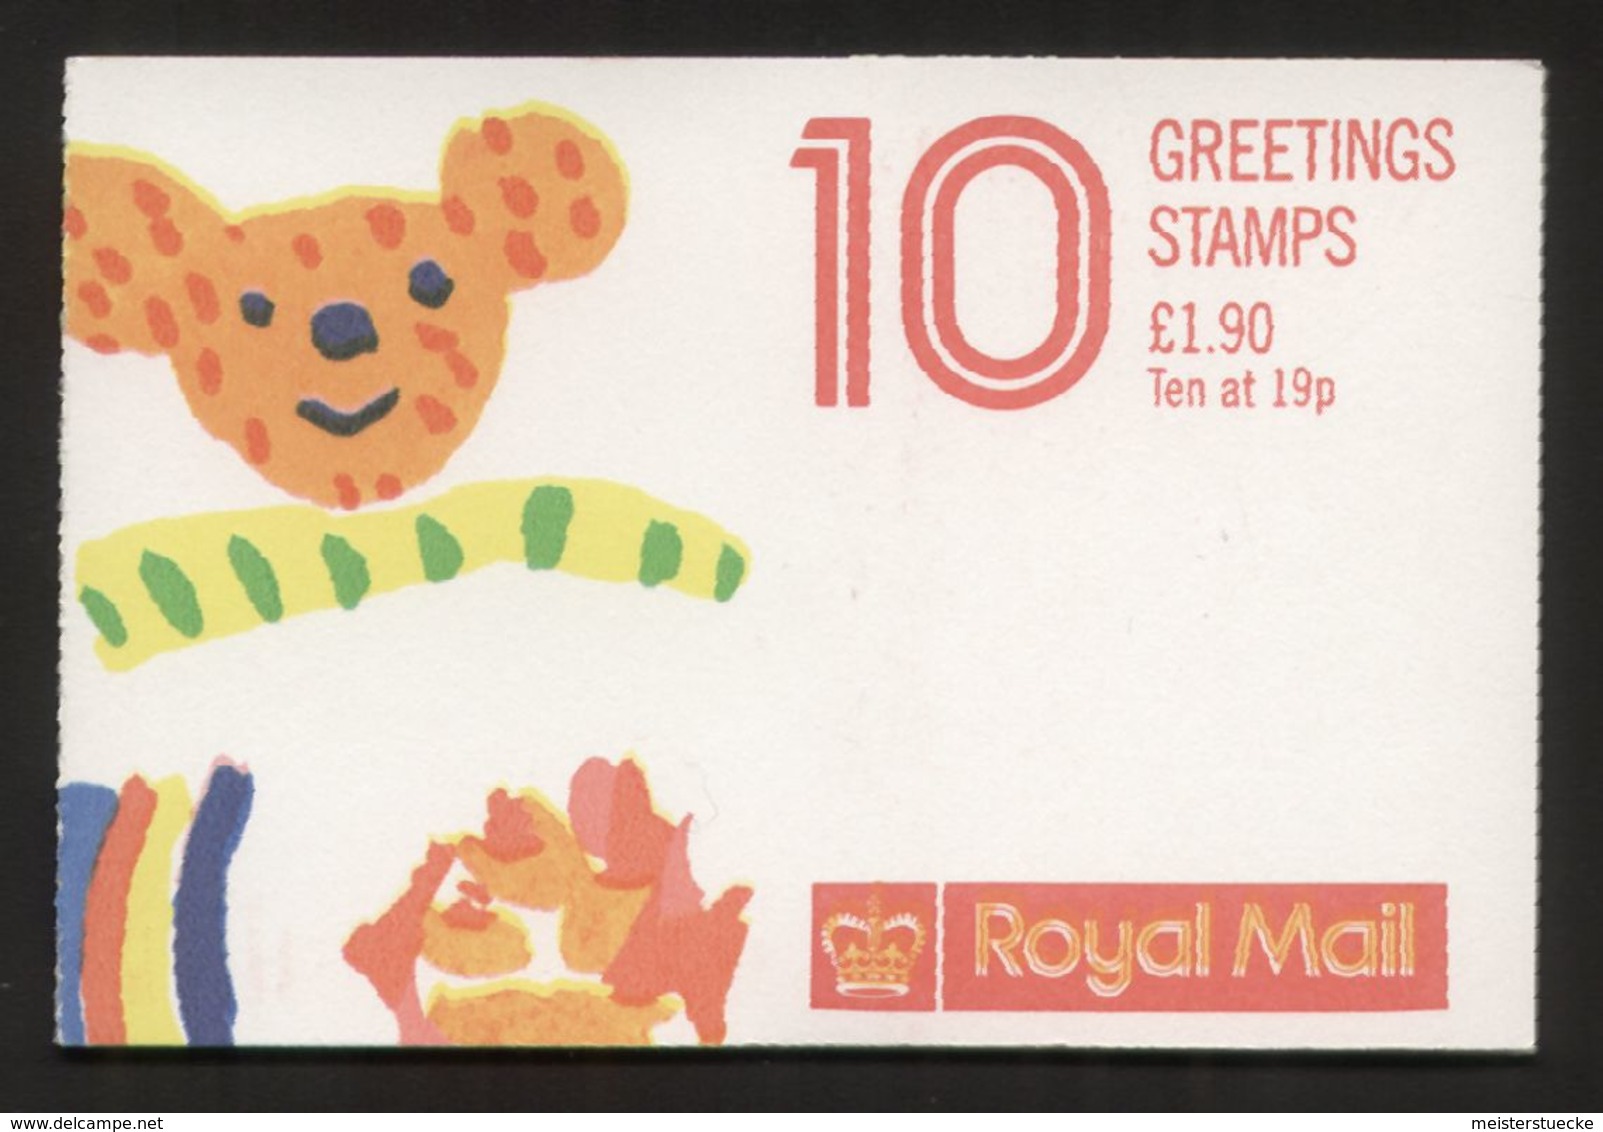 GB Markenheftchen (MH 84) / Booklet - 1989 - ** / Postfrisch / Mint - 10 X 19p Greetings Stamps - Carnets